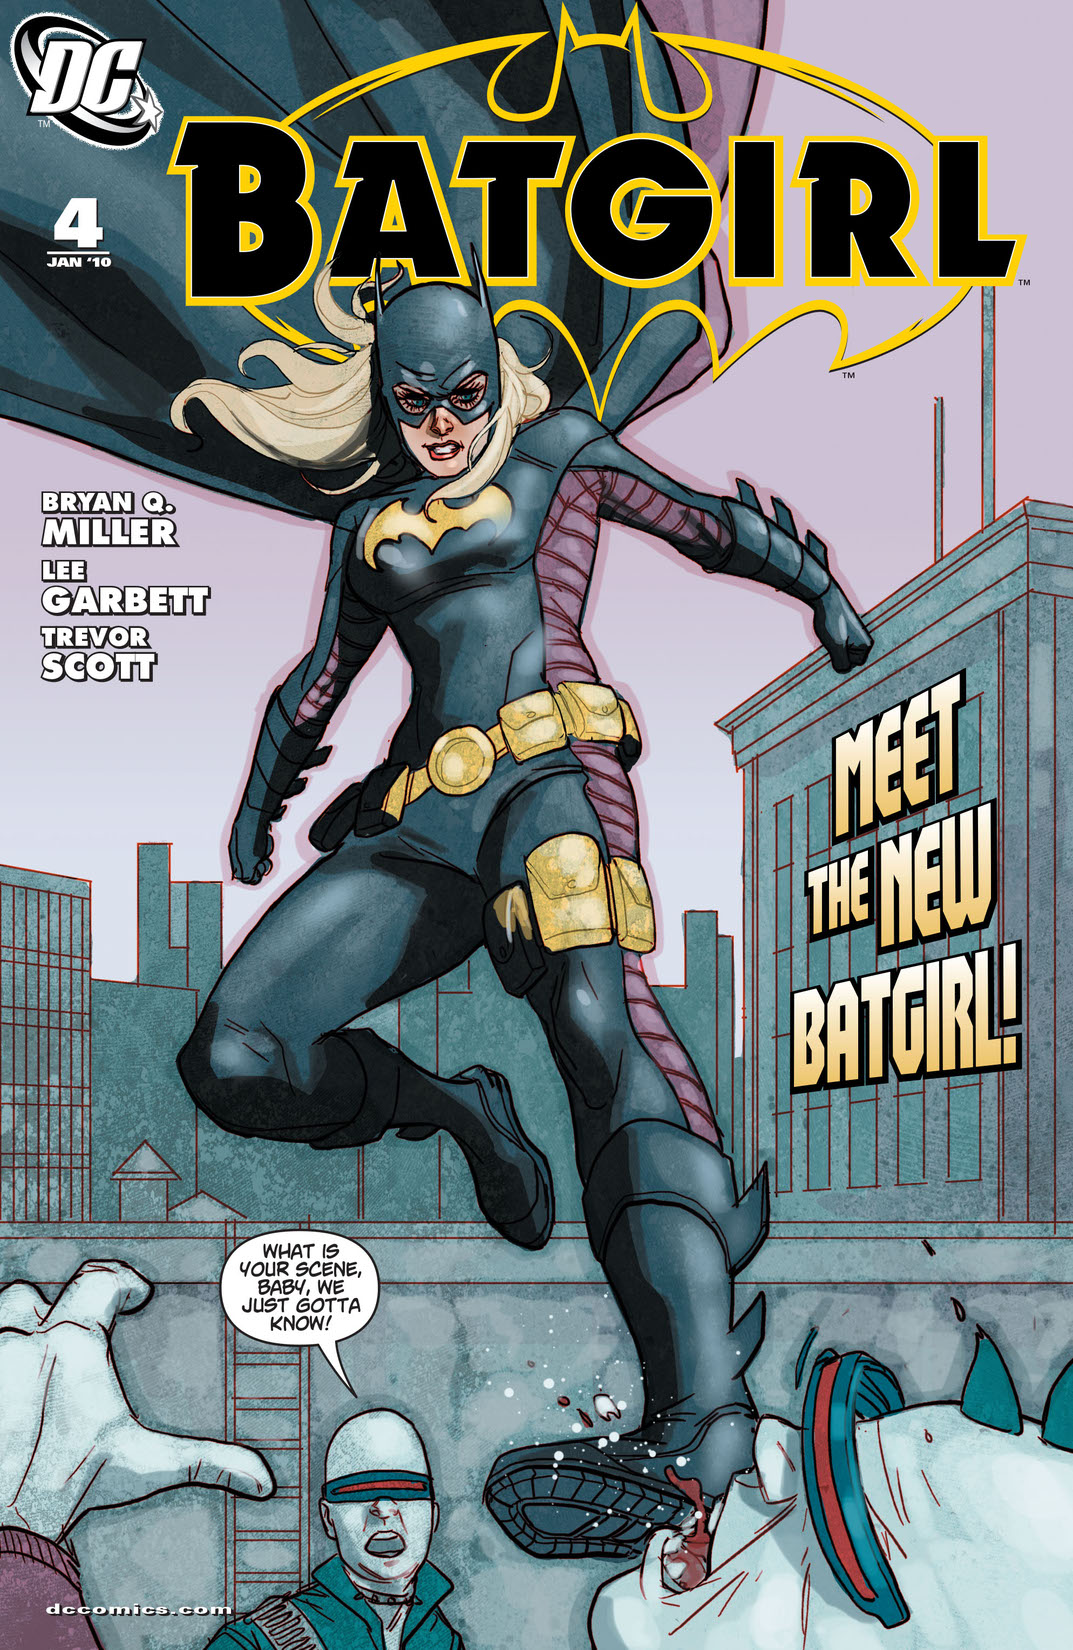 Batgirl (2009-) #4 preview images